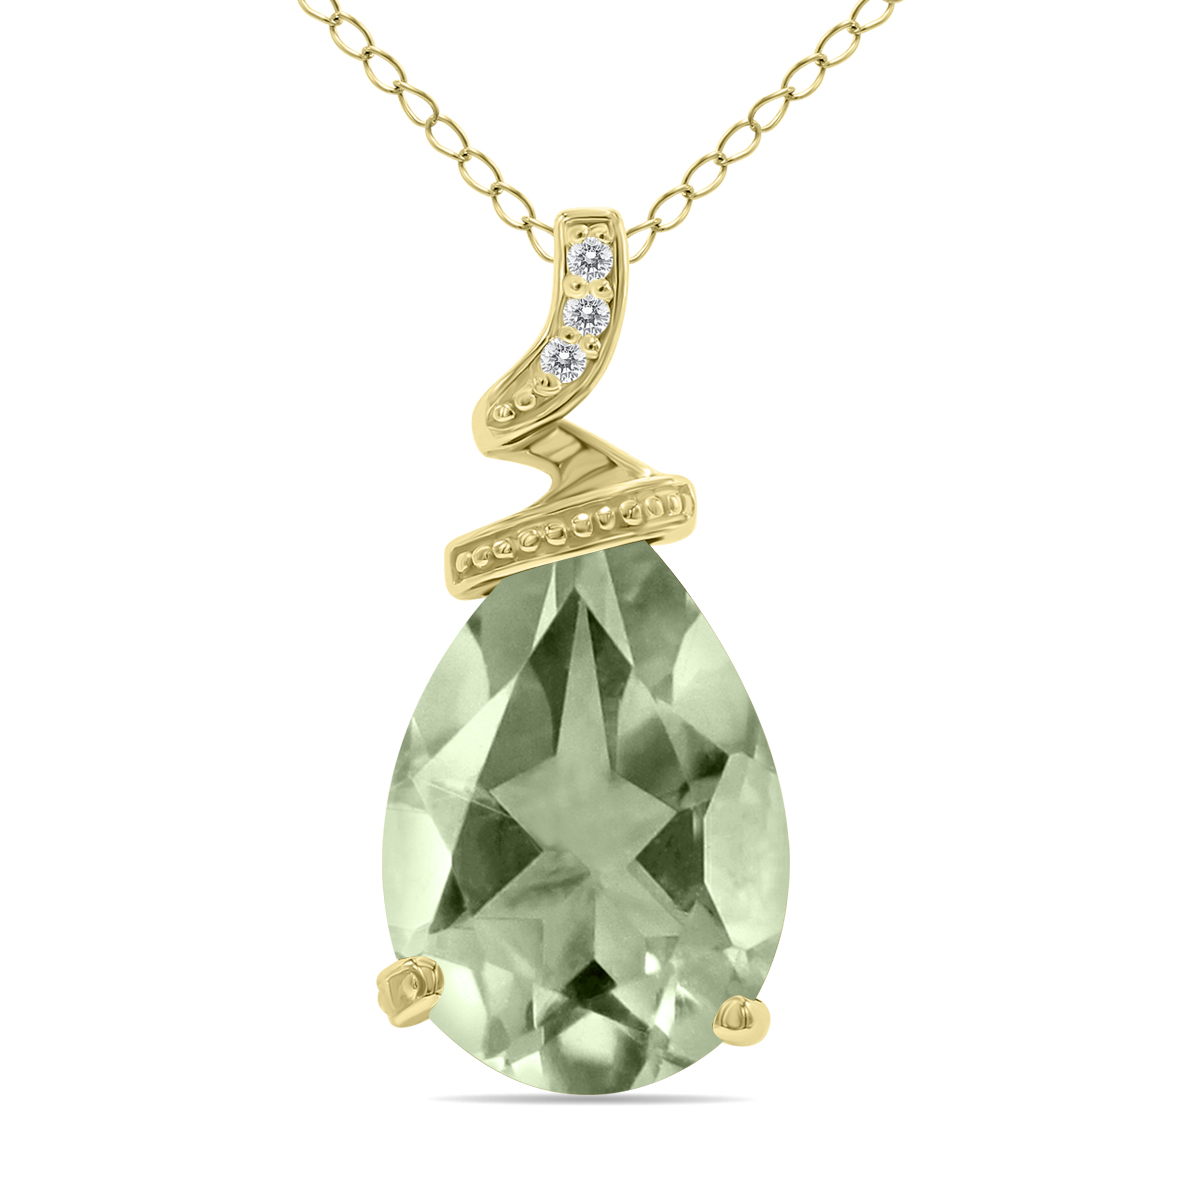 5 Carat Pear Shaped Green Amethyst & Diamond Pendant in 10K Yellow Gold